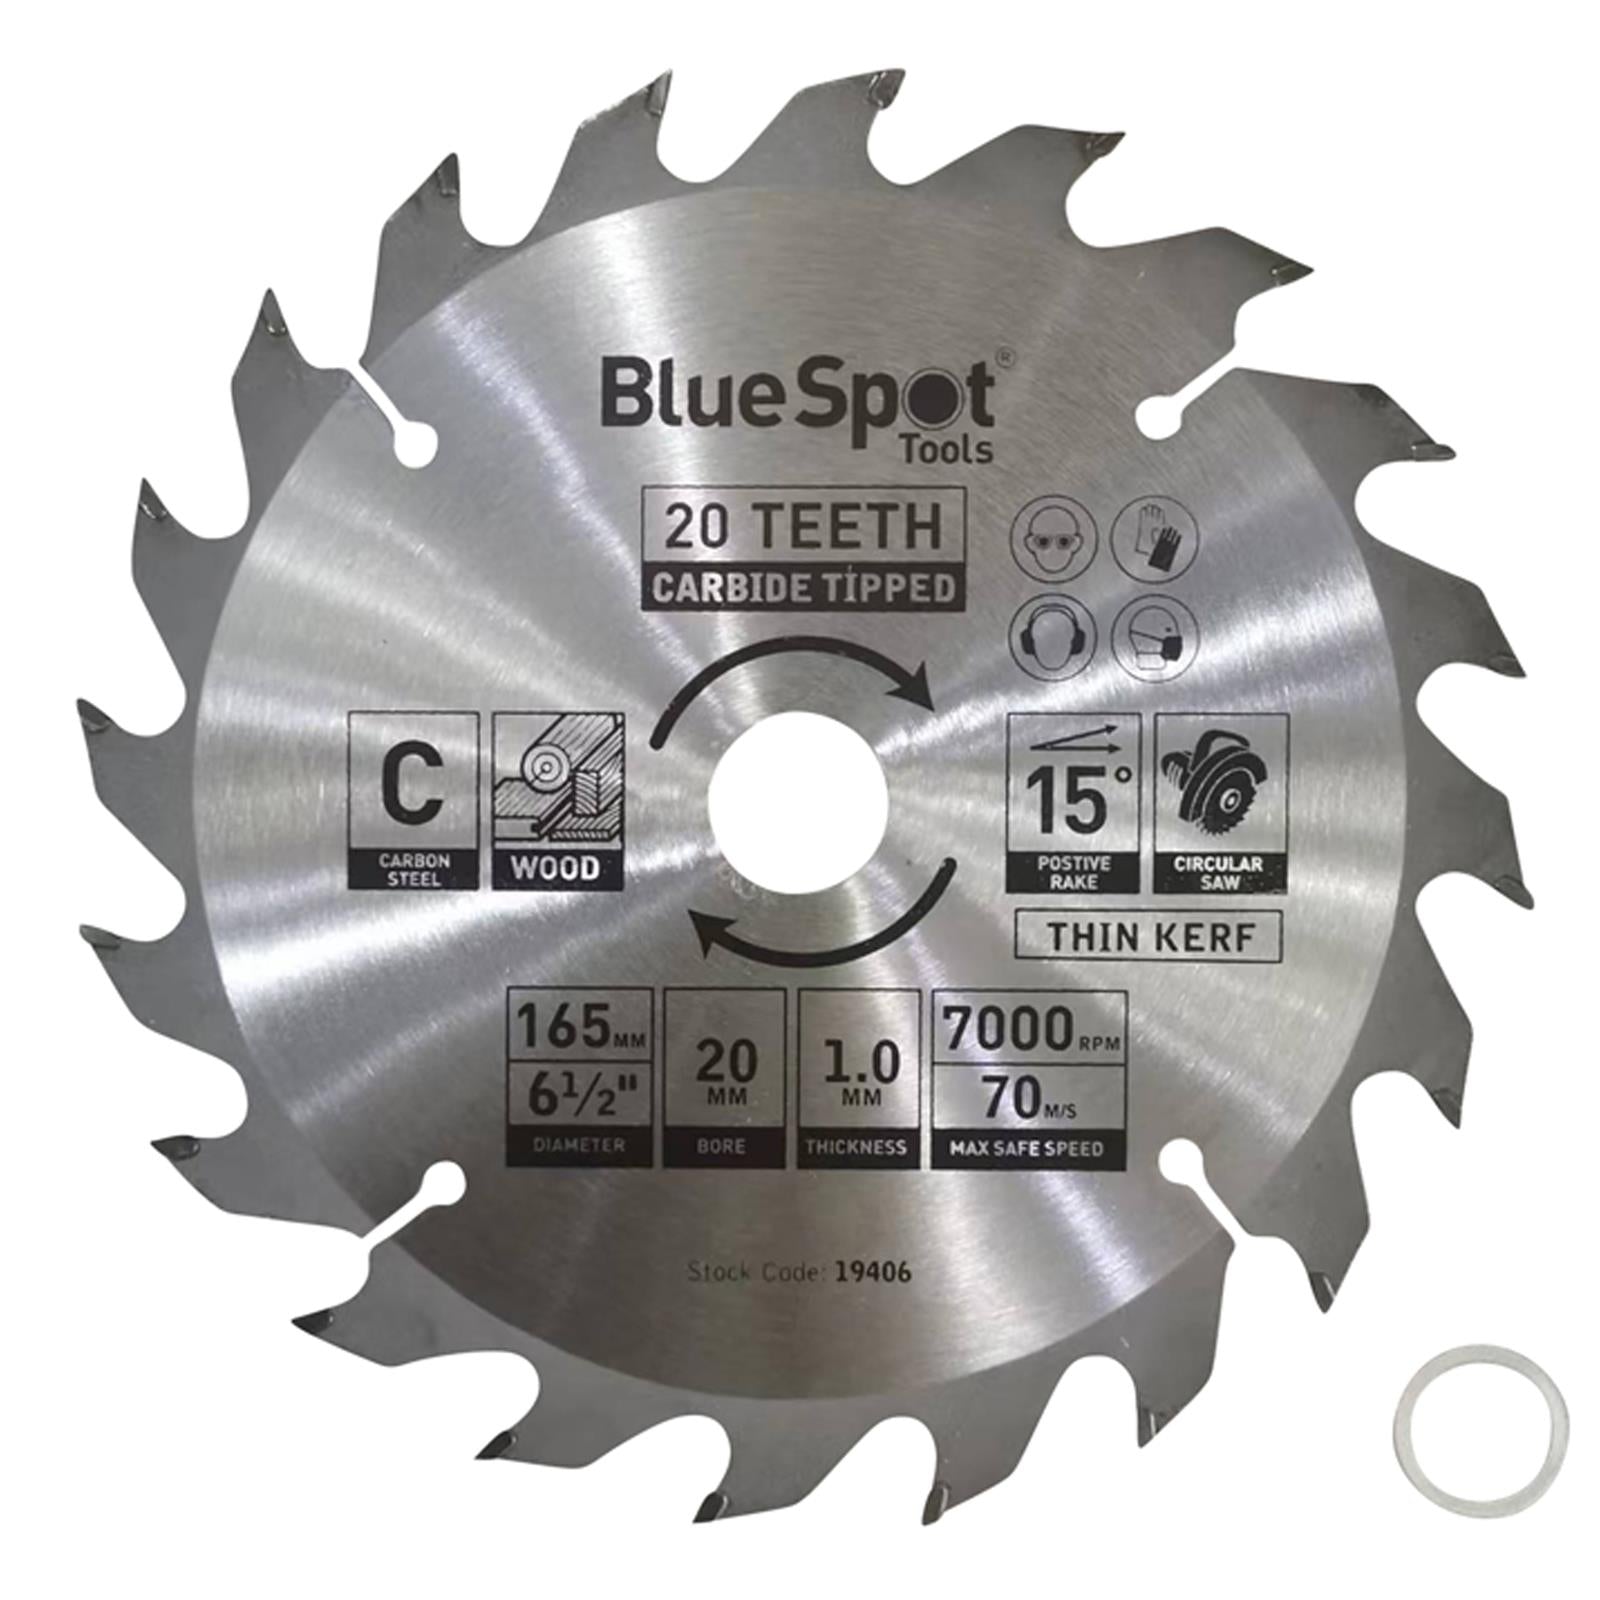 BlueSpot TCT Circular Saw Blade 20 Teeth 165mm x 20mm